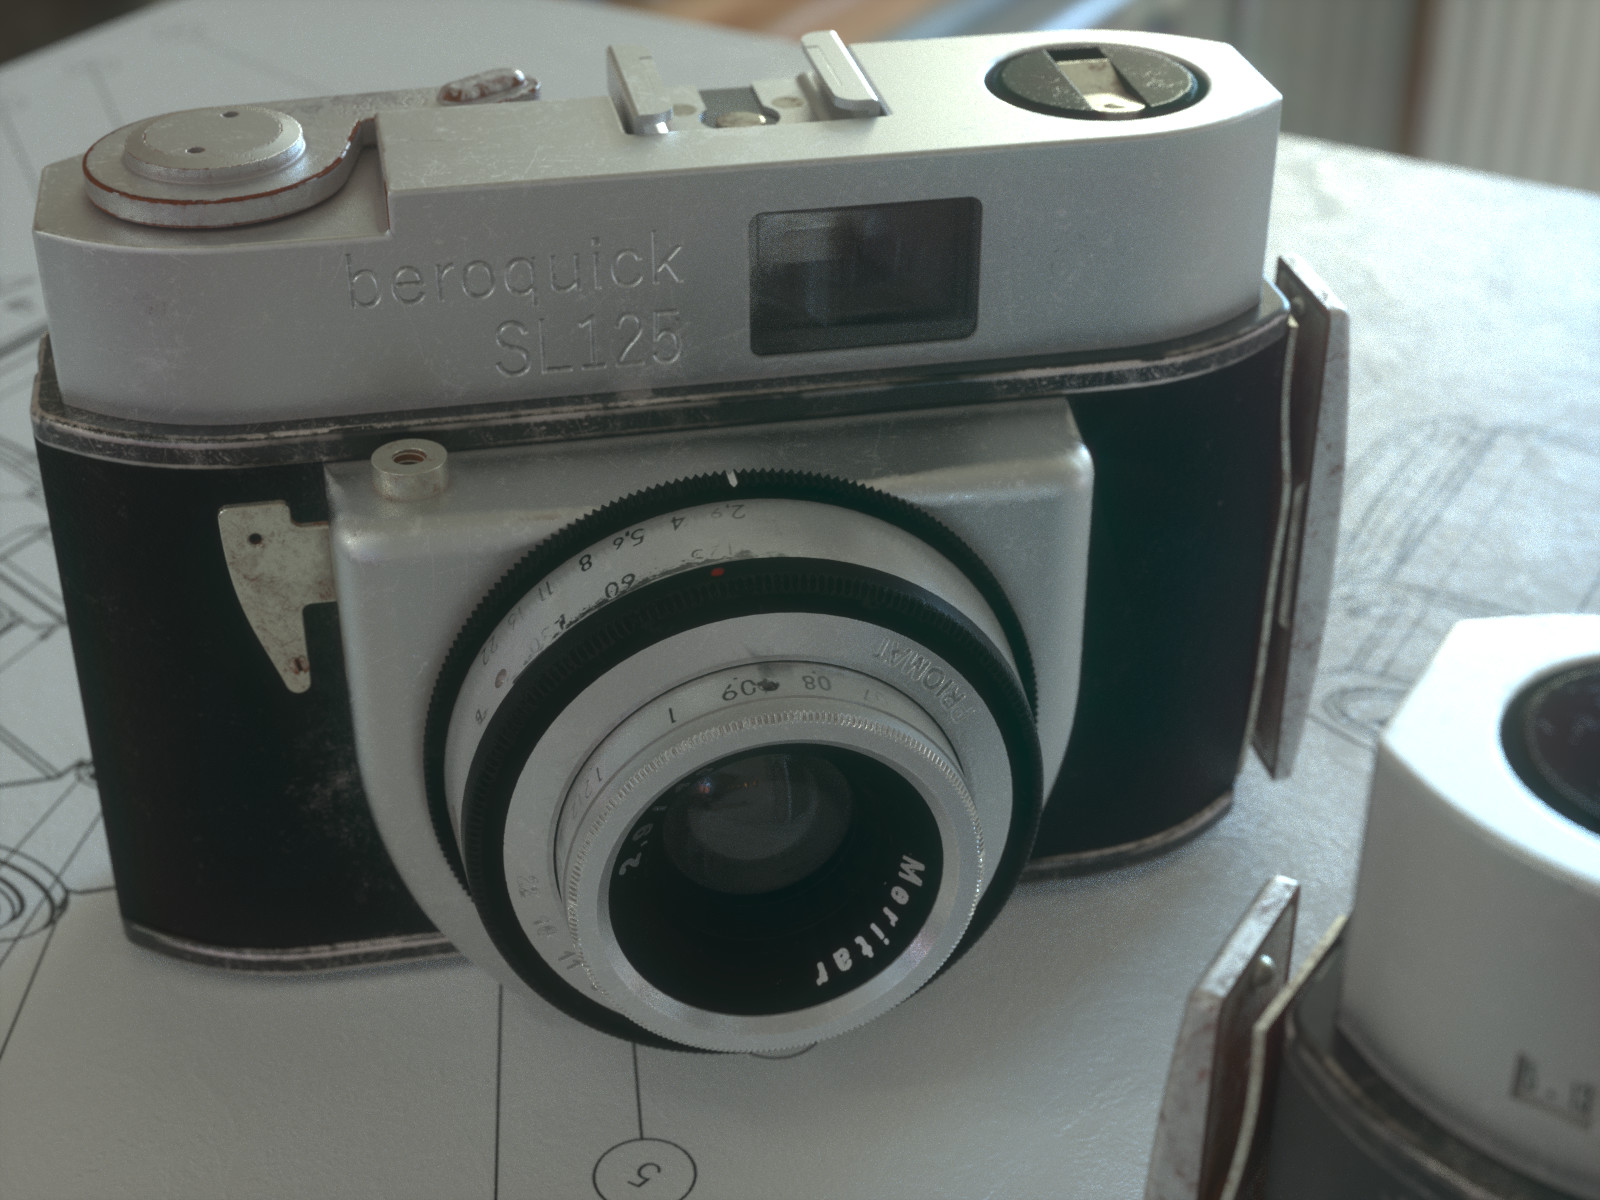 Nurbs Modeling - Vintage Camera Beroquick SL125